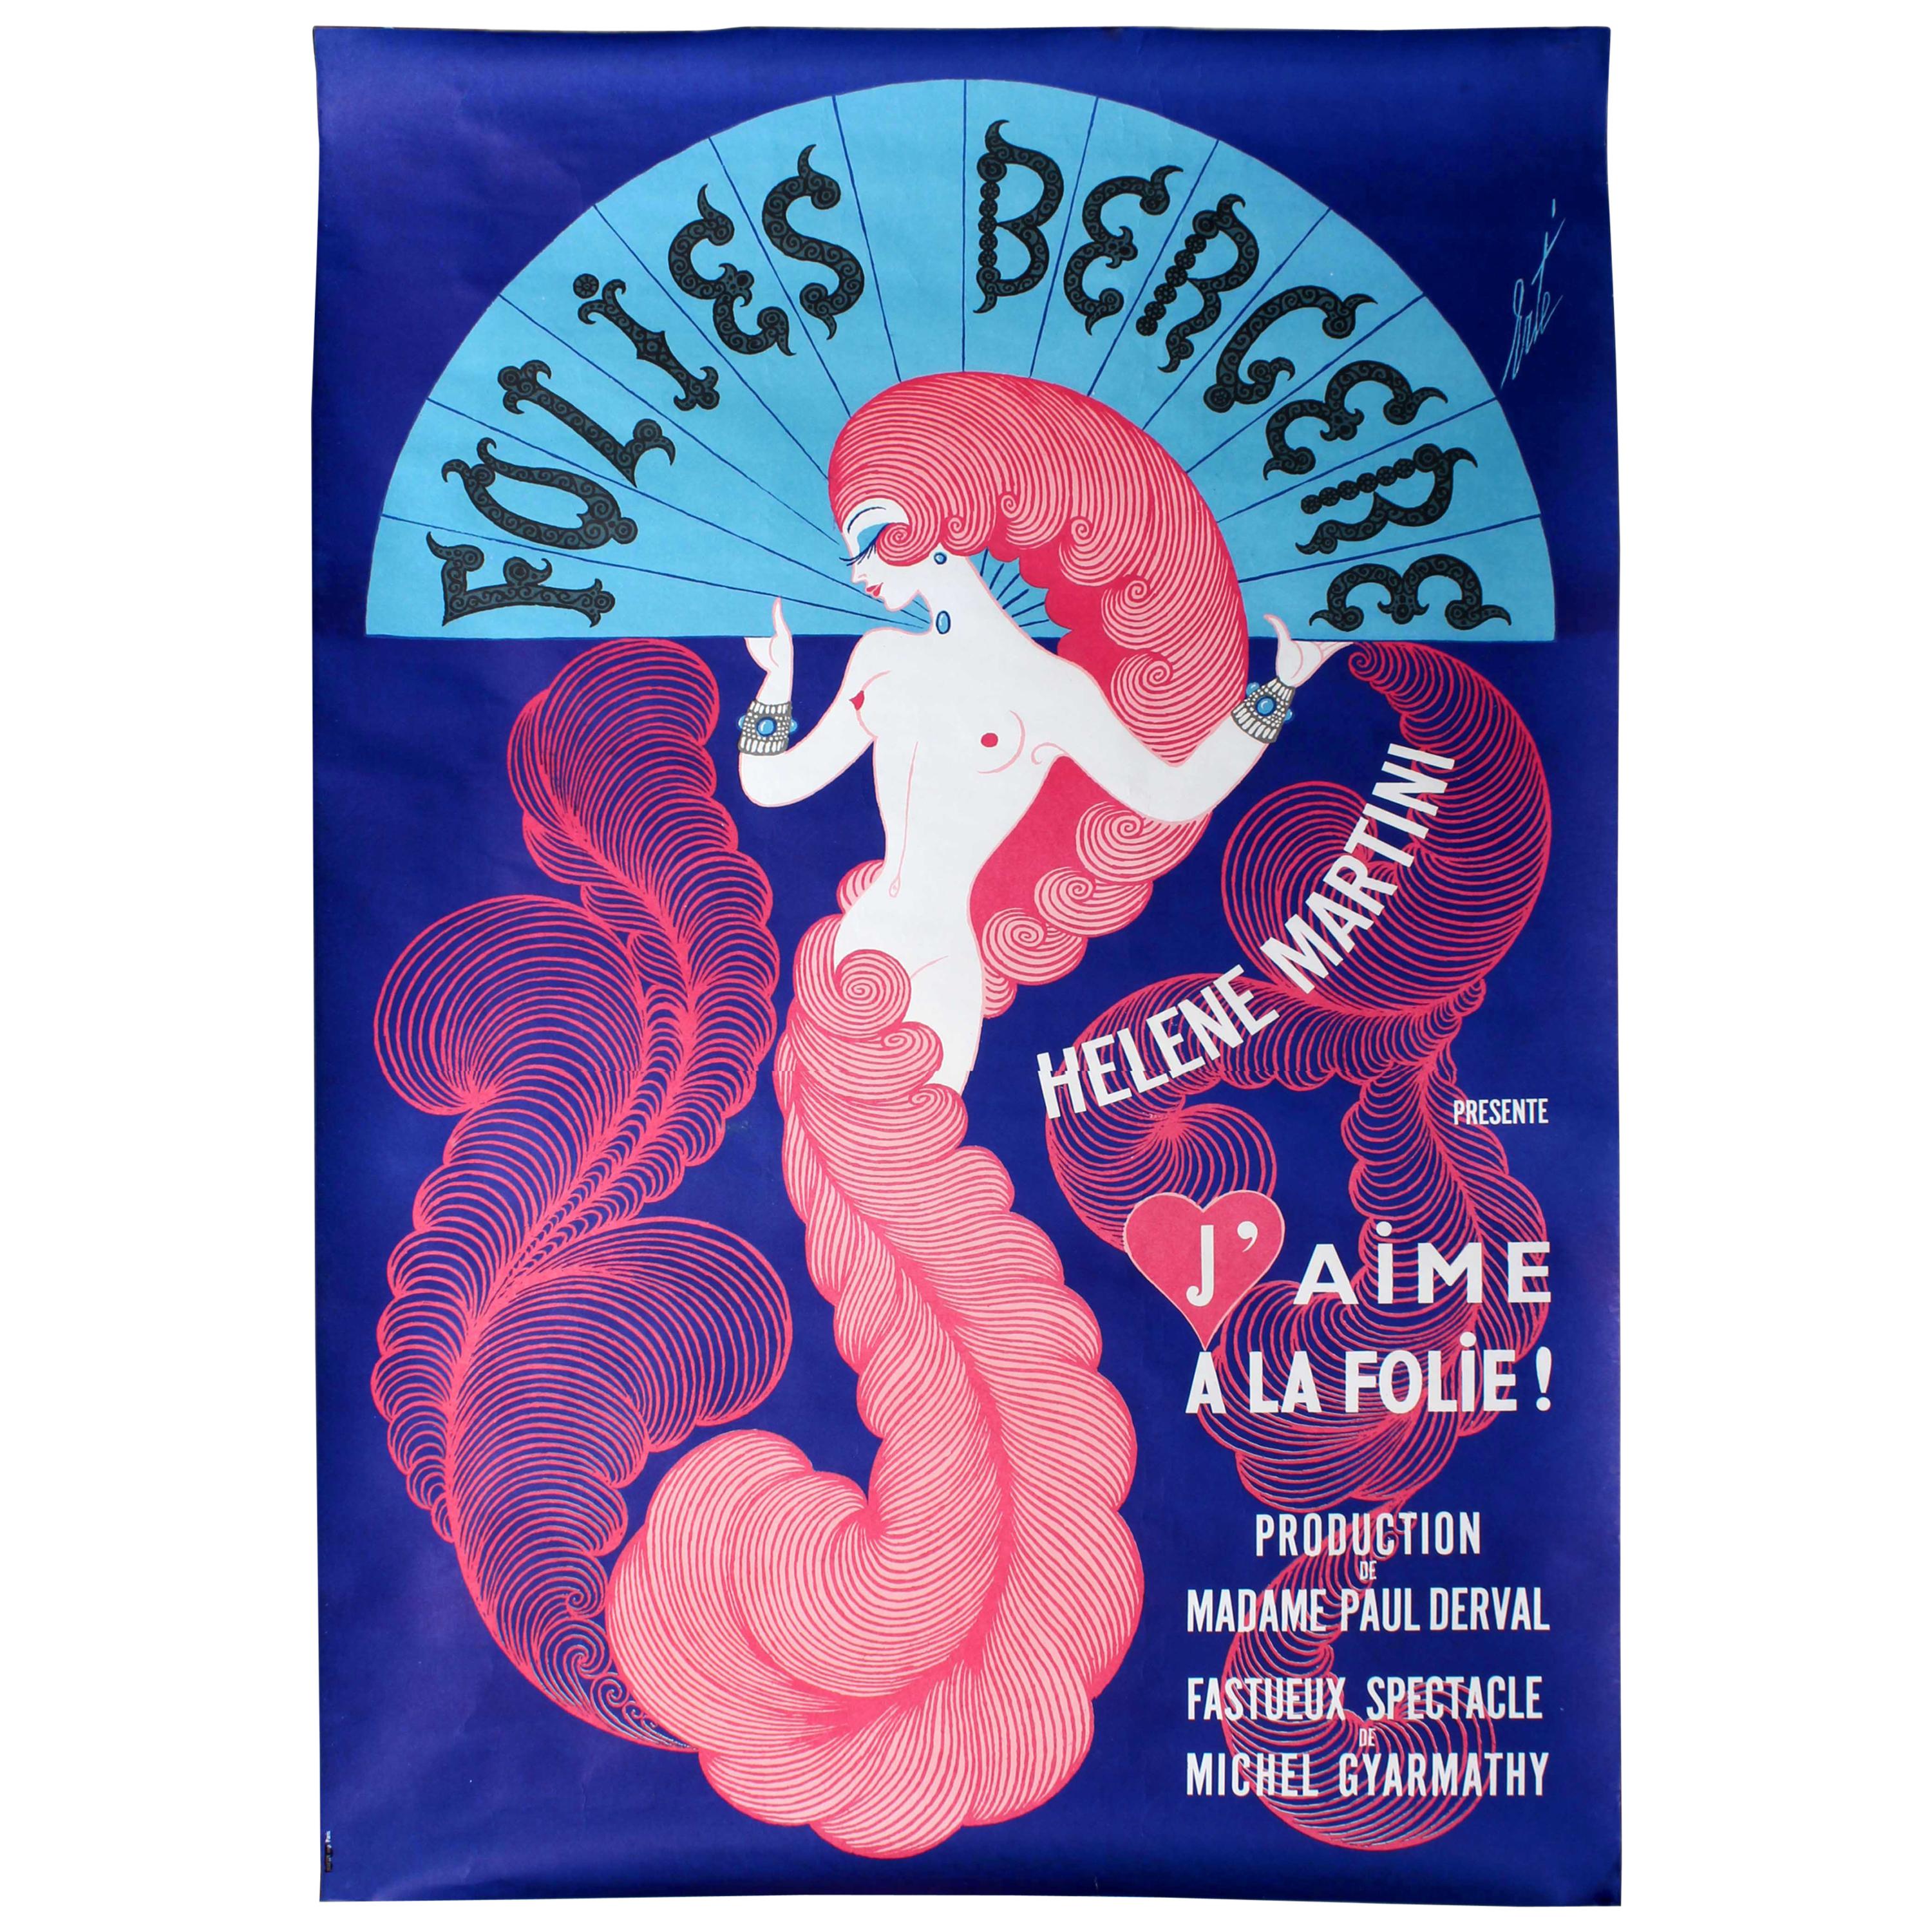 Original Vintage Folies Bergere Poster by Erte Helene Martini Cabaret Show Paris